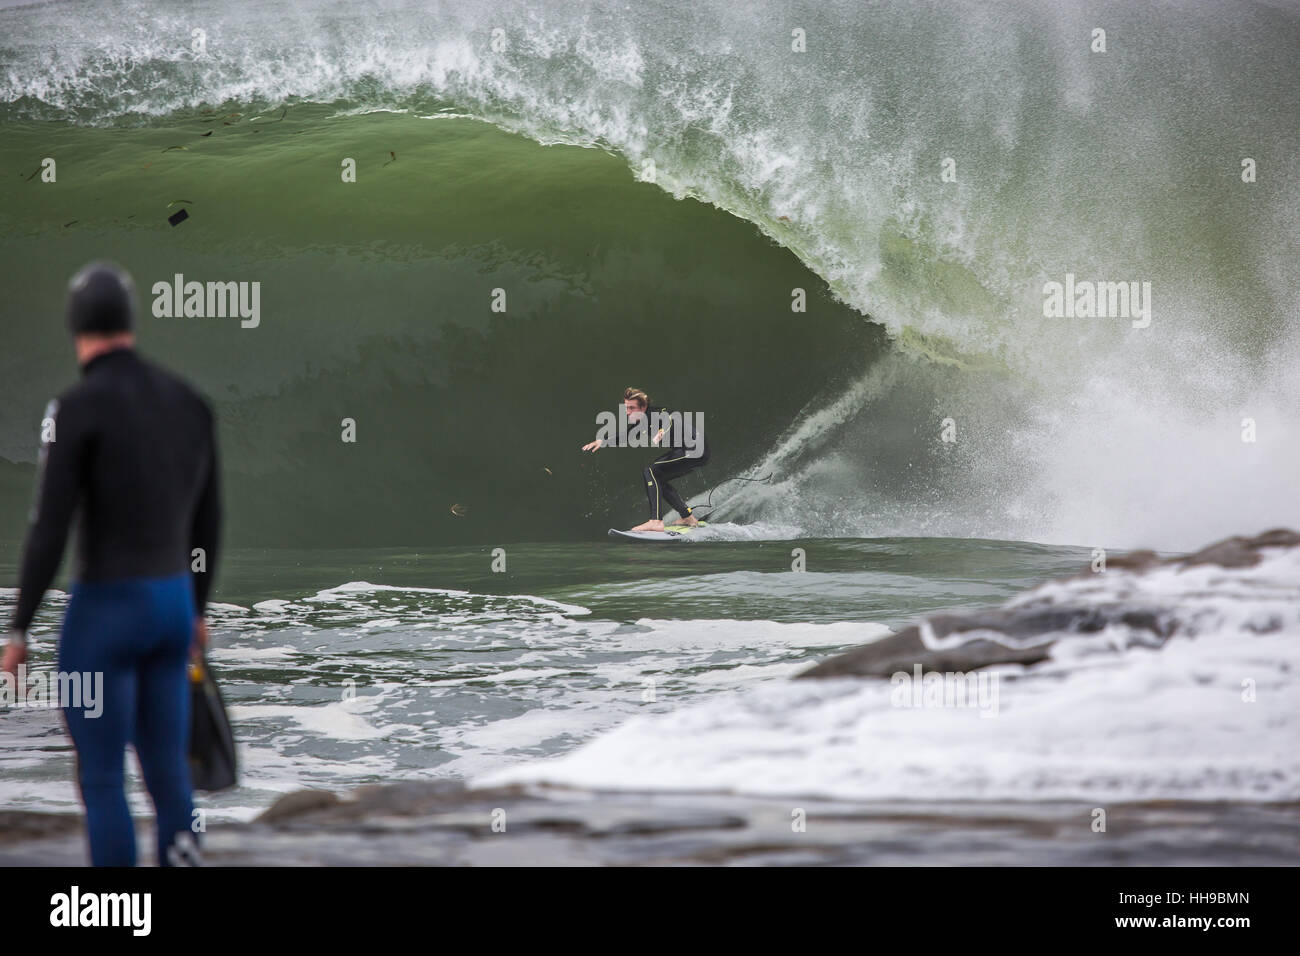 Pro surfer Riley Laing surfing in the Red Bull big wave Cape Fear concours surf à Sydney, Australie Banque D'Images